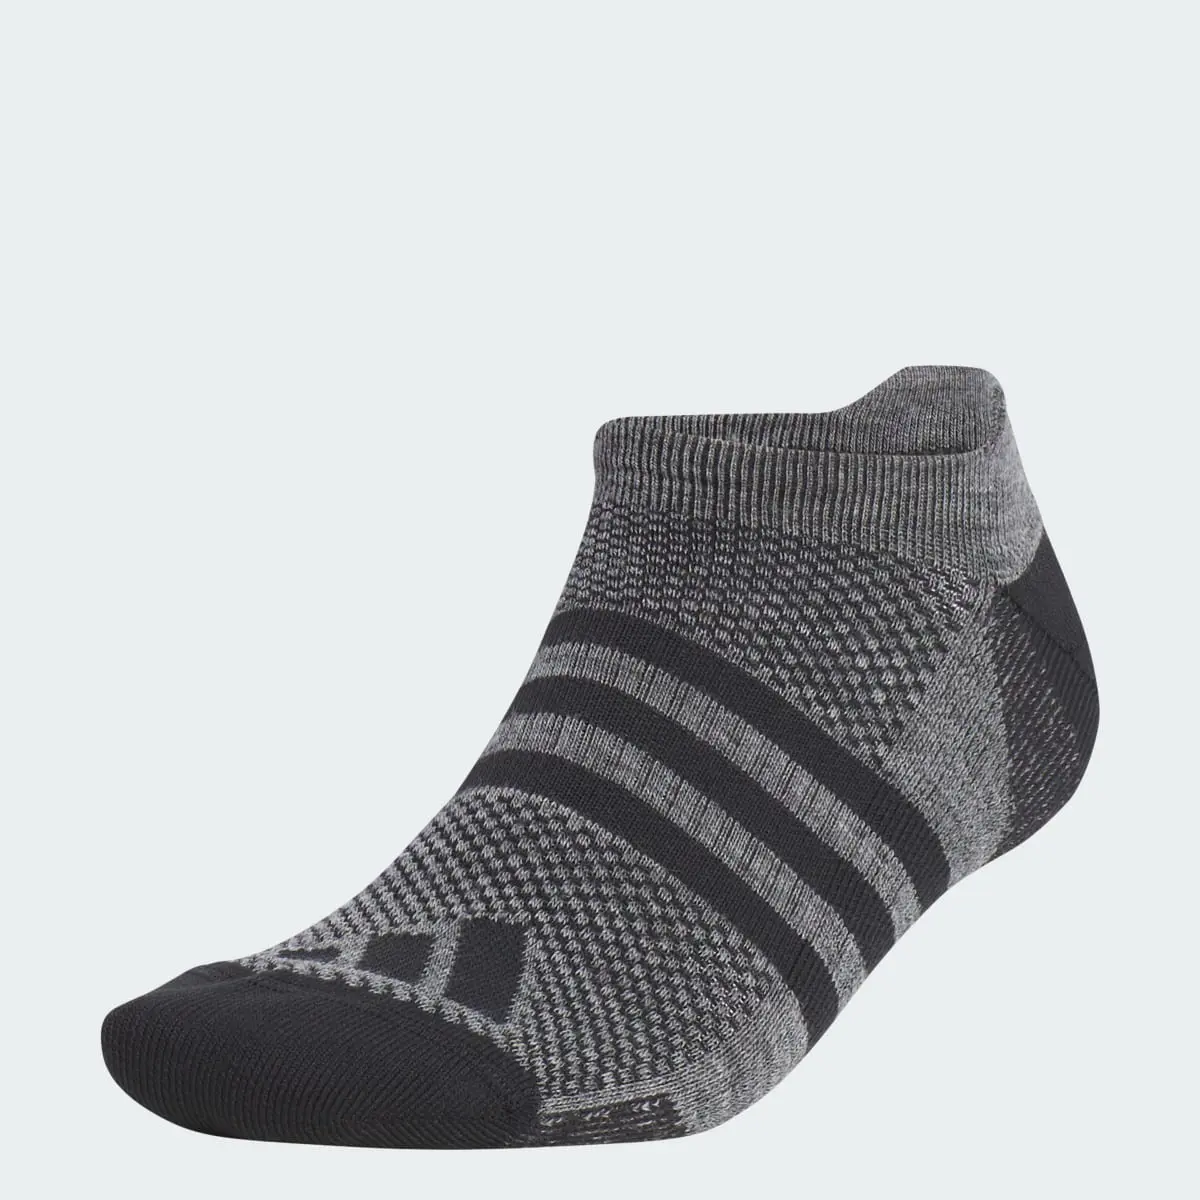 Adidas Wool Low Ankle Socks. 1